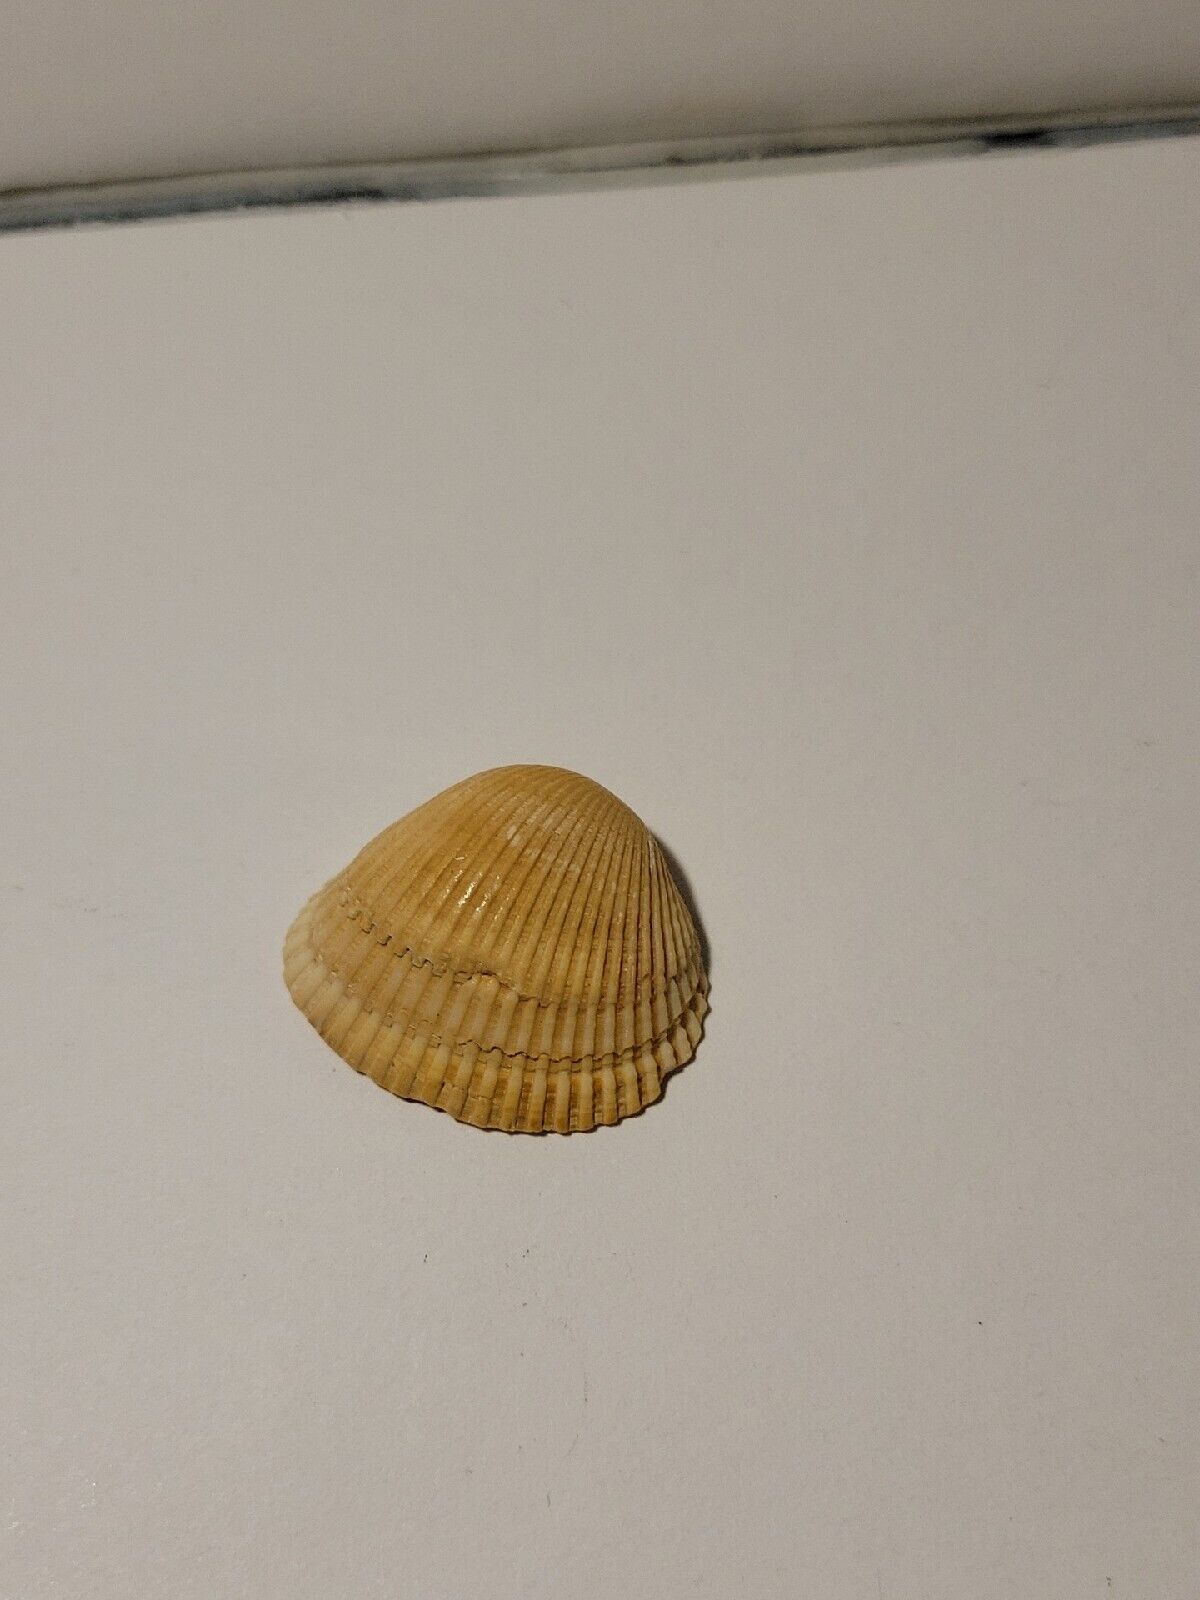 Hand Picked Floridian Sea Shell - Anadara Brasiliana